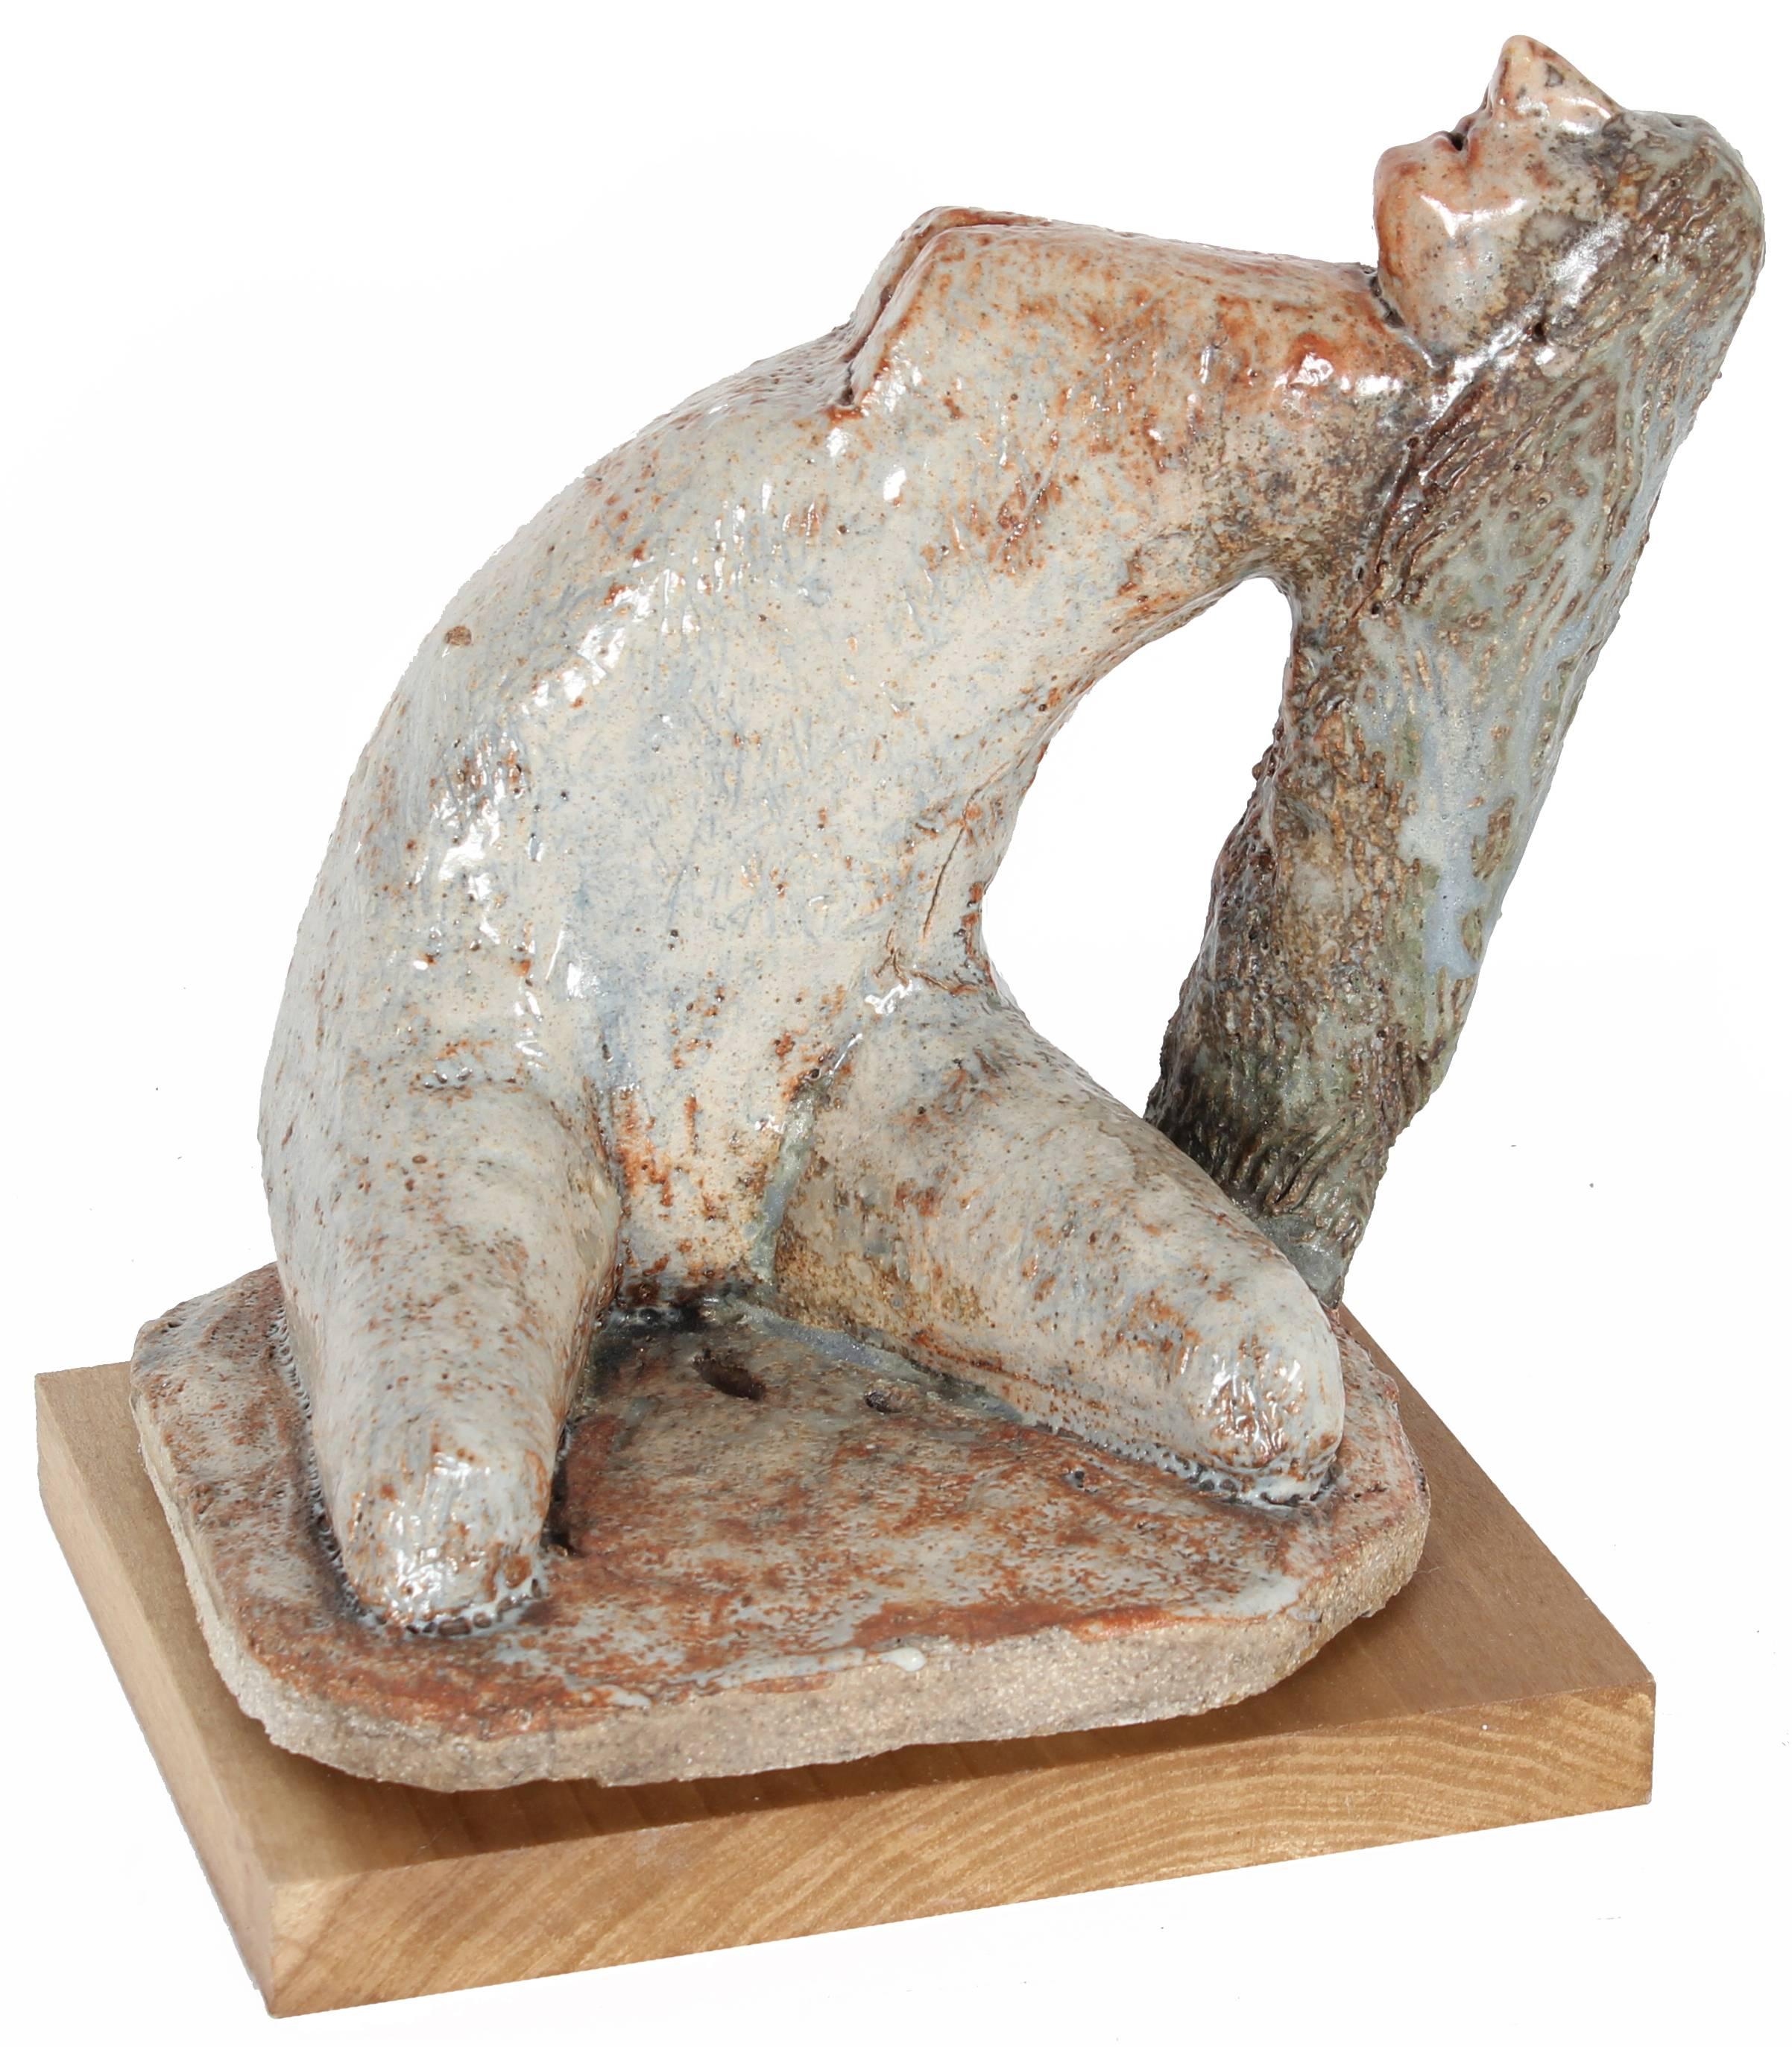 Dave Fox Nude Sculpture - Arched Female Form Glazed Ceramic Sculpture, 2006